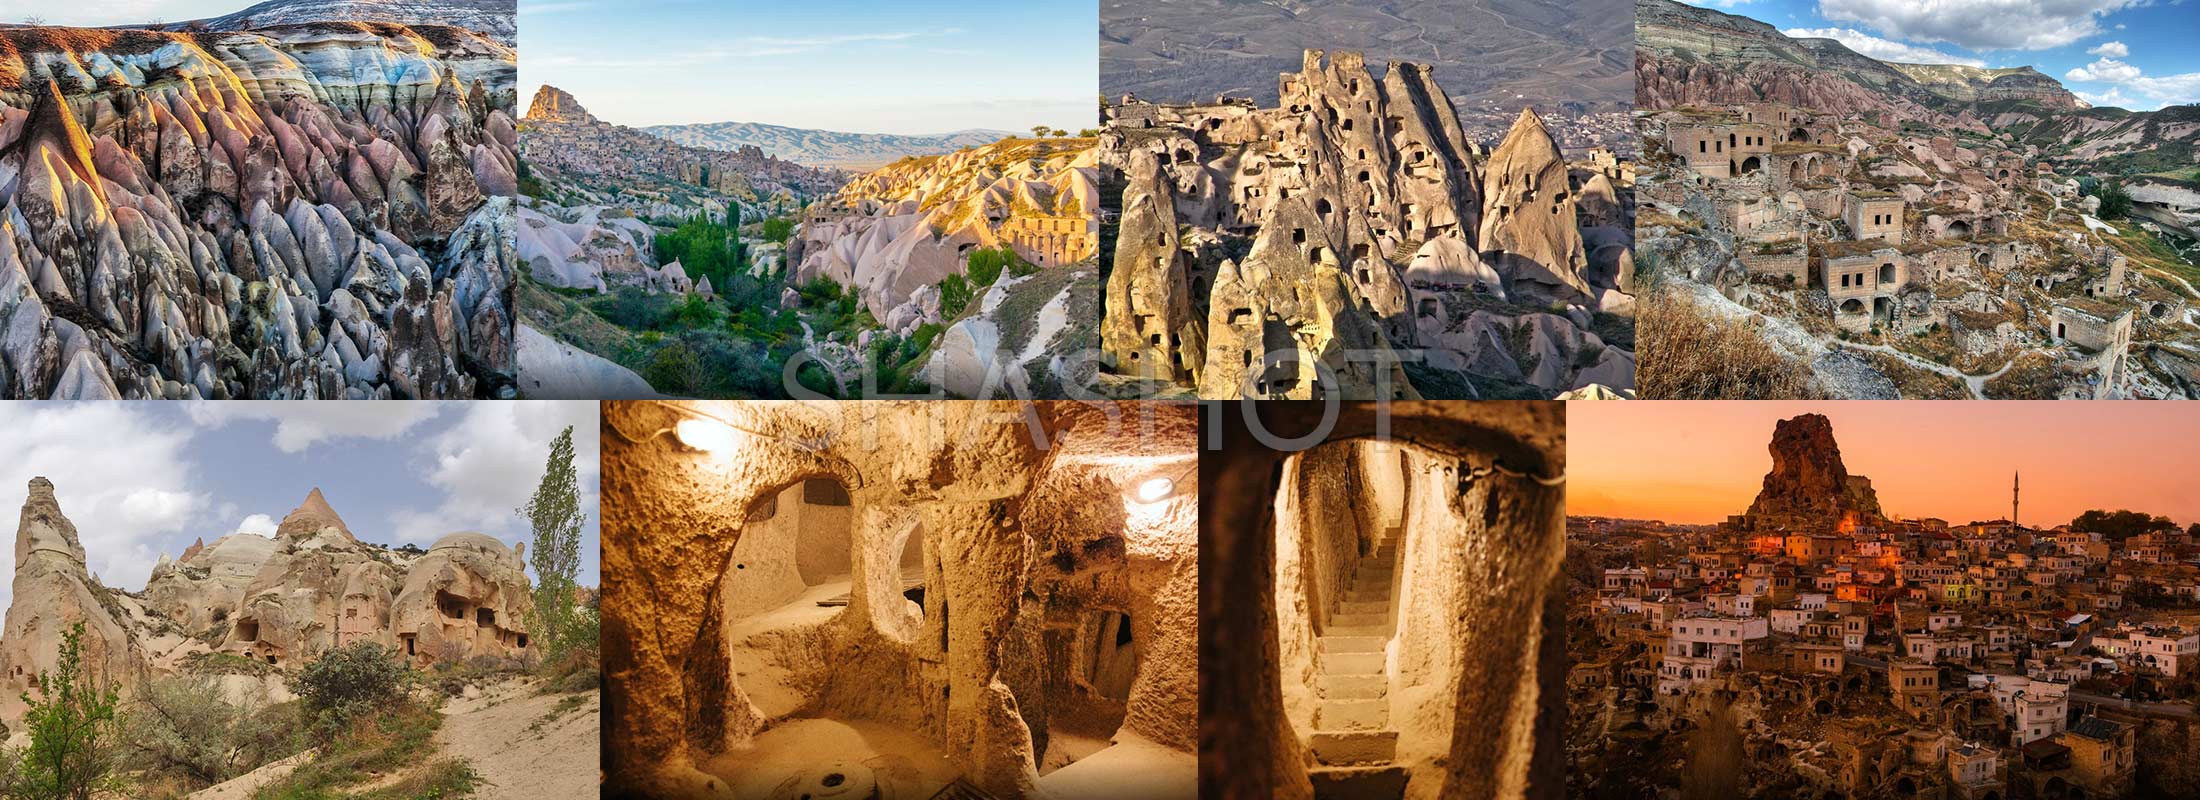 cappadocia-turquia-turkiye-shashot-travel-Tour-a-pie